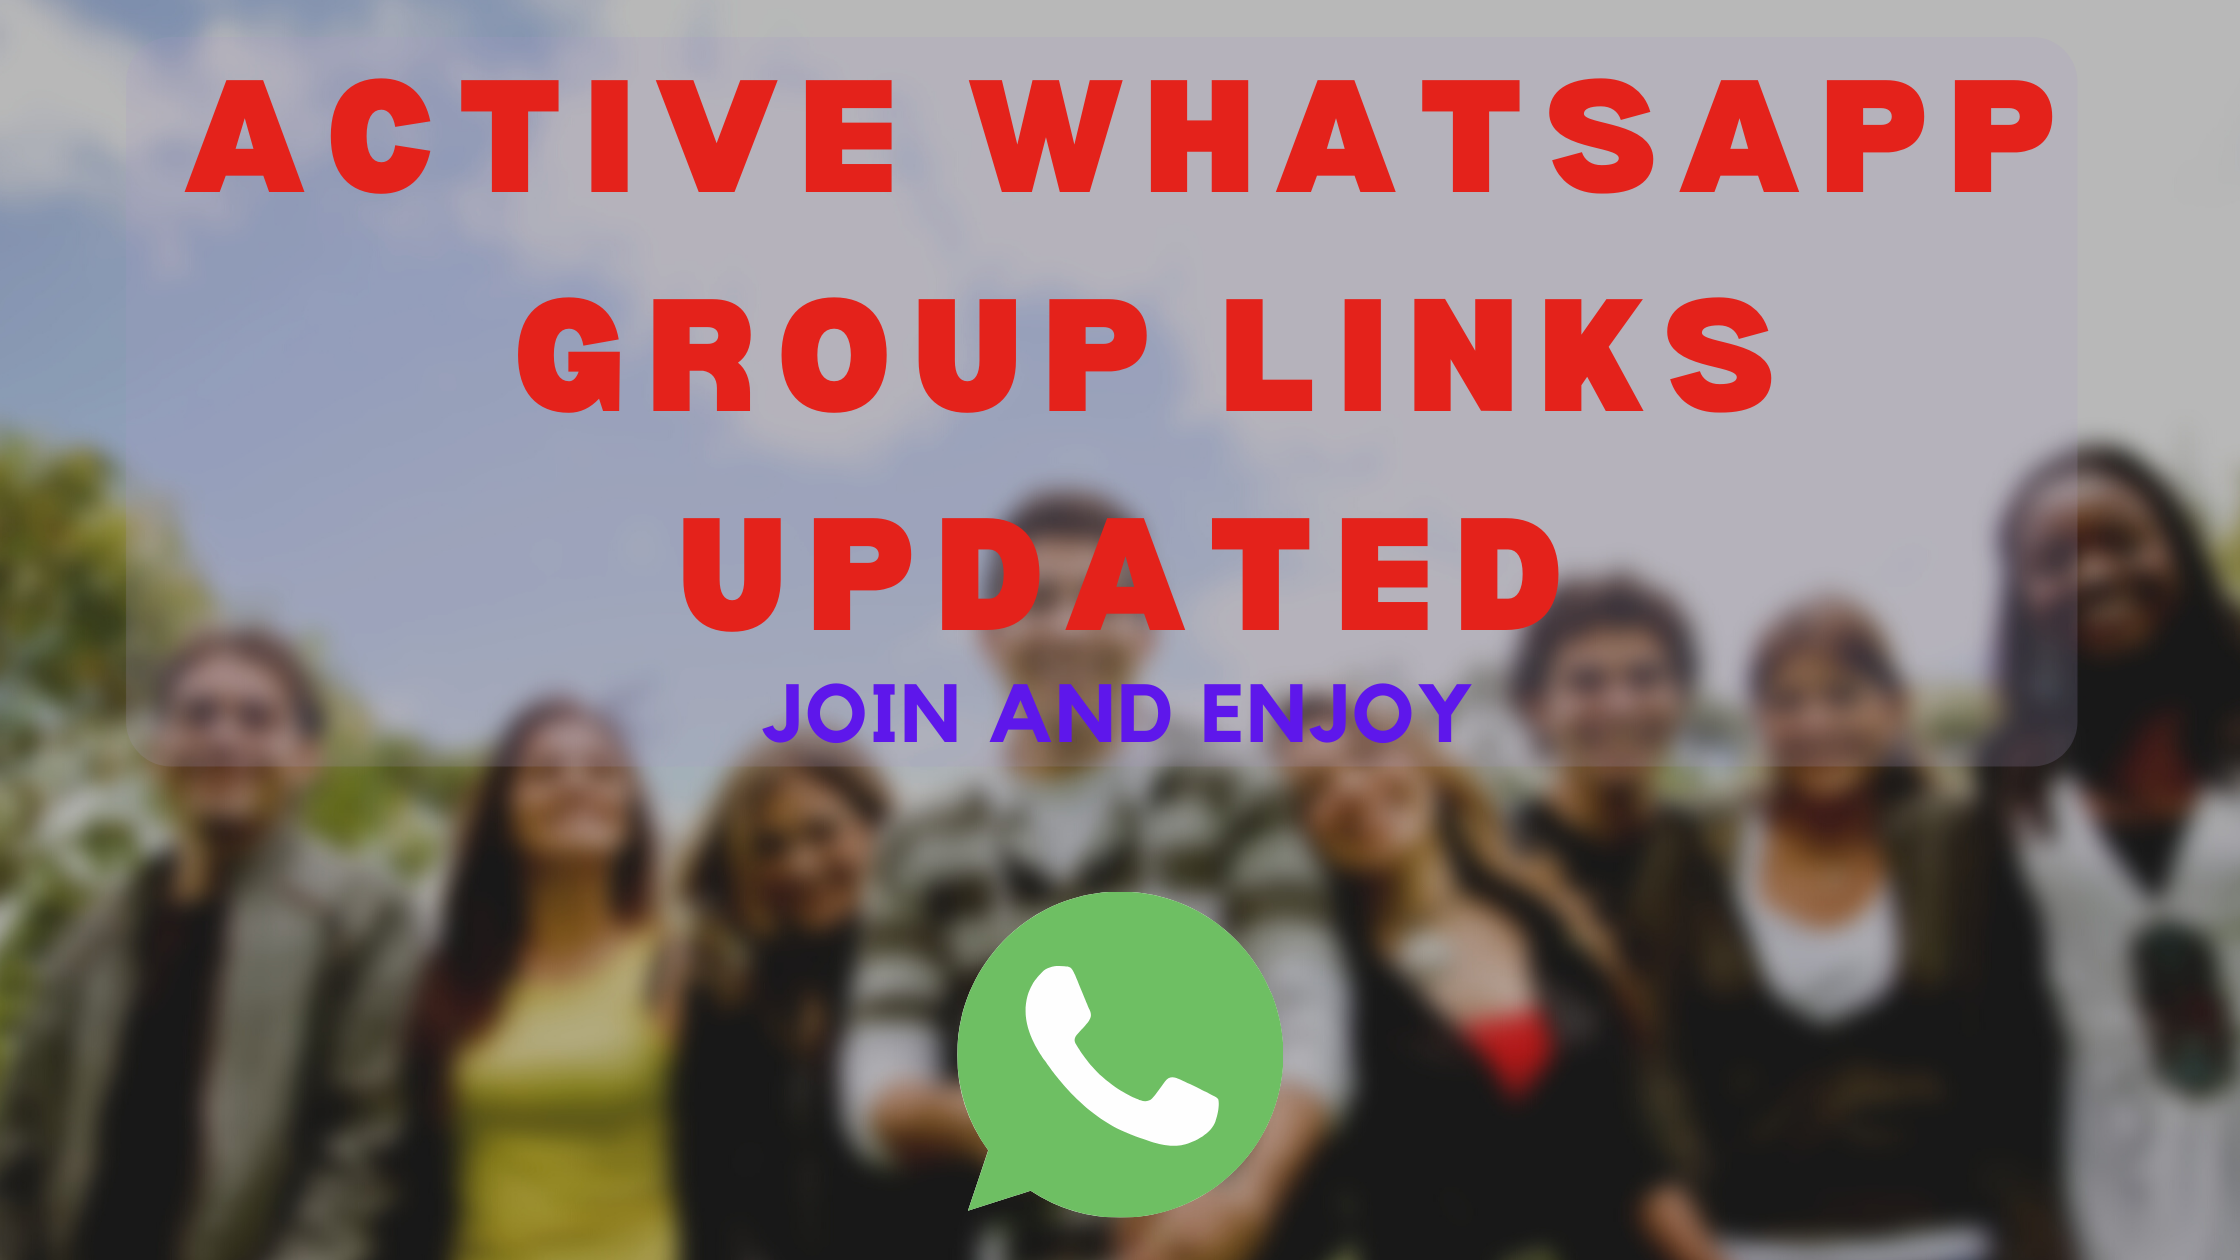 Whatsapp groups links in zimbabwe